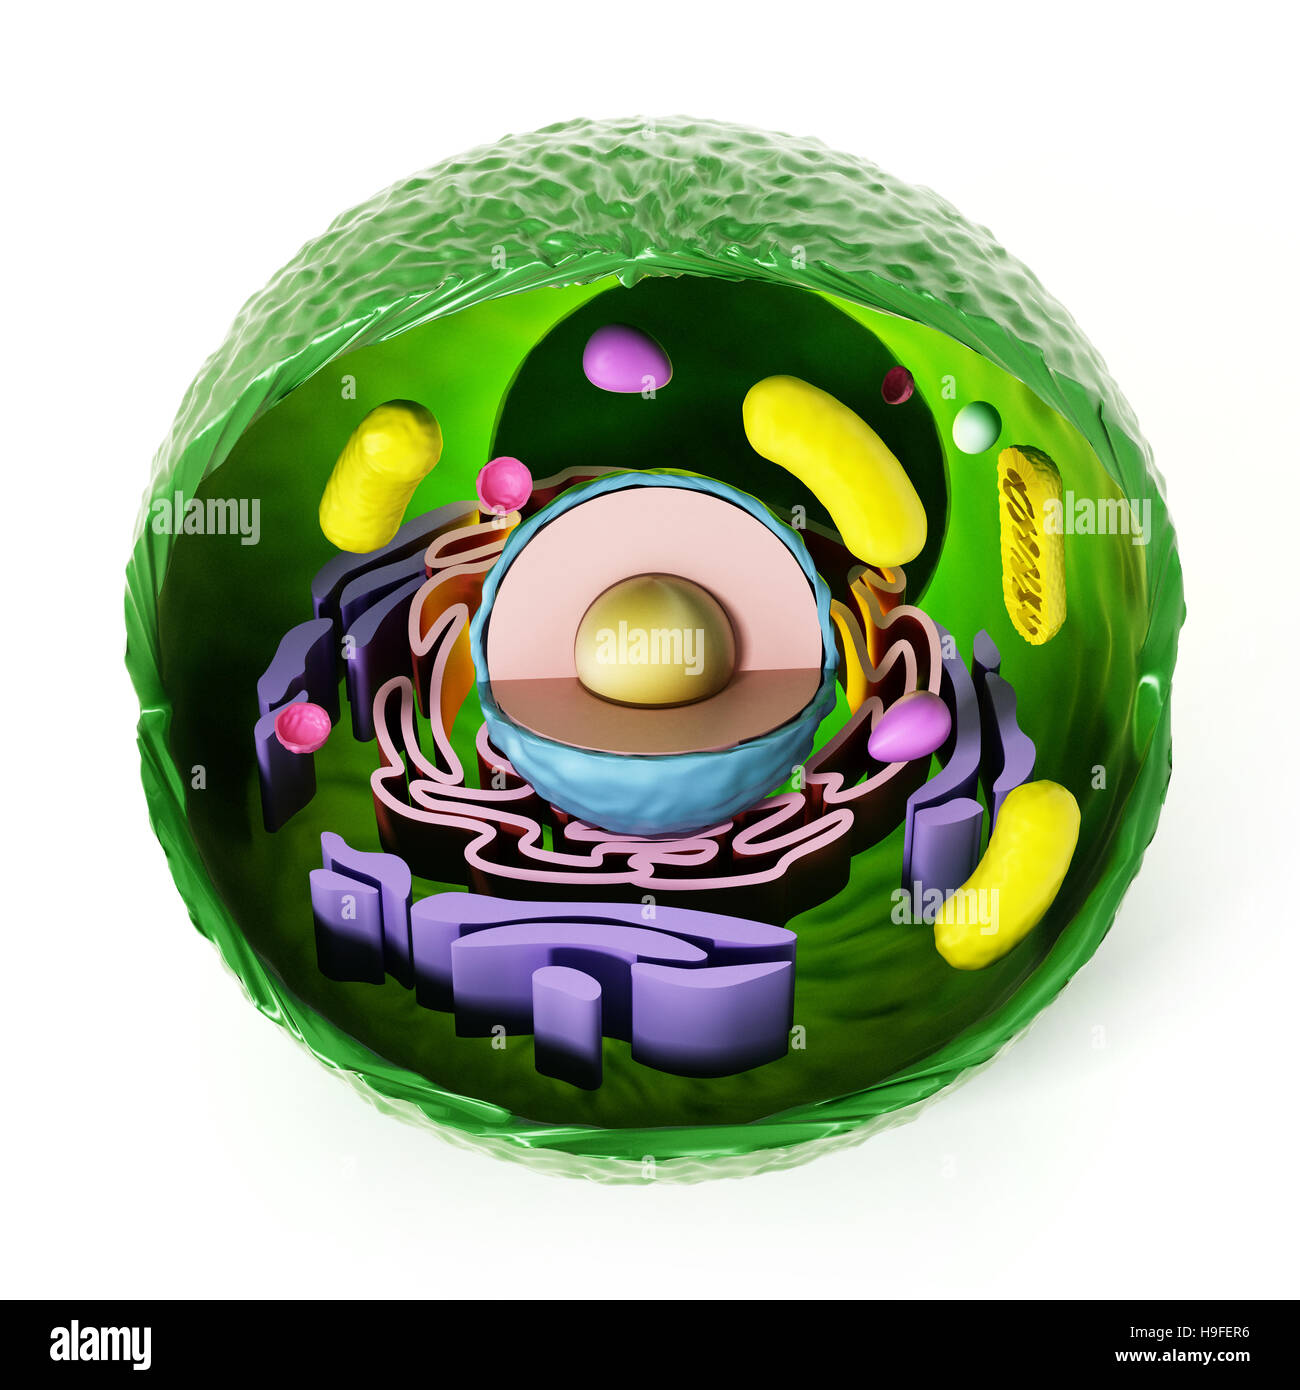 Animal cell anatomy isolated on white background. 3D illustration. Stock Photo